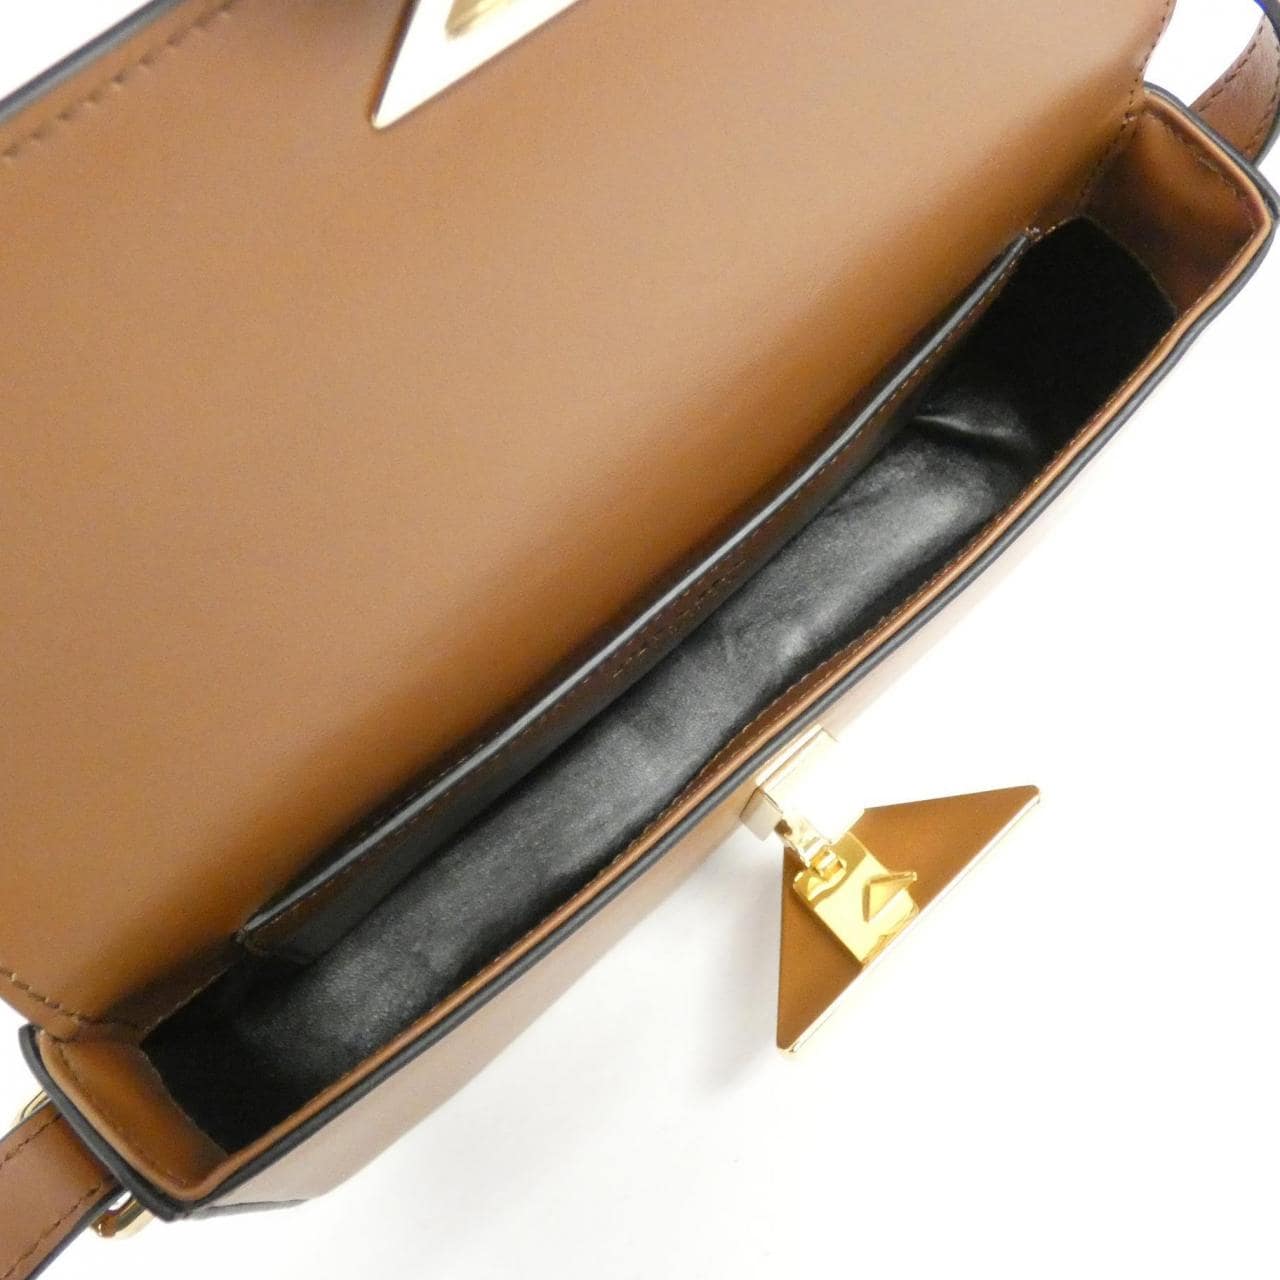 [BRAND NEW] Prada 1BD339 Shoulder Bag